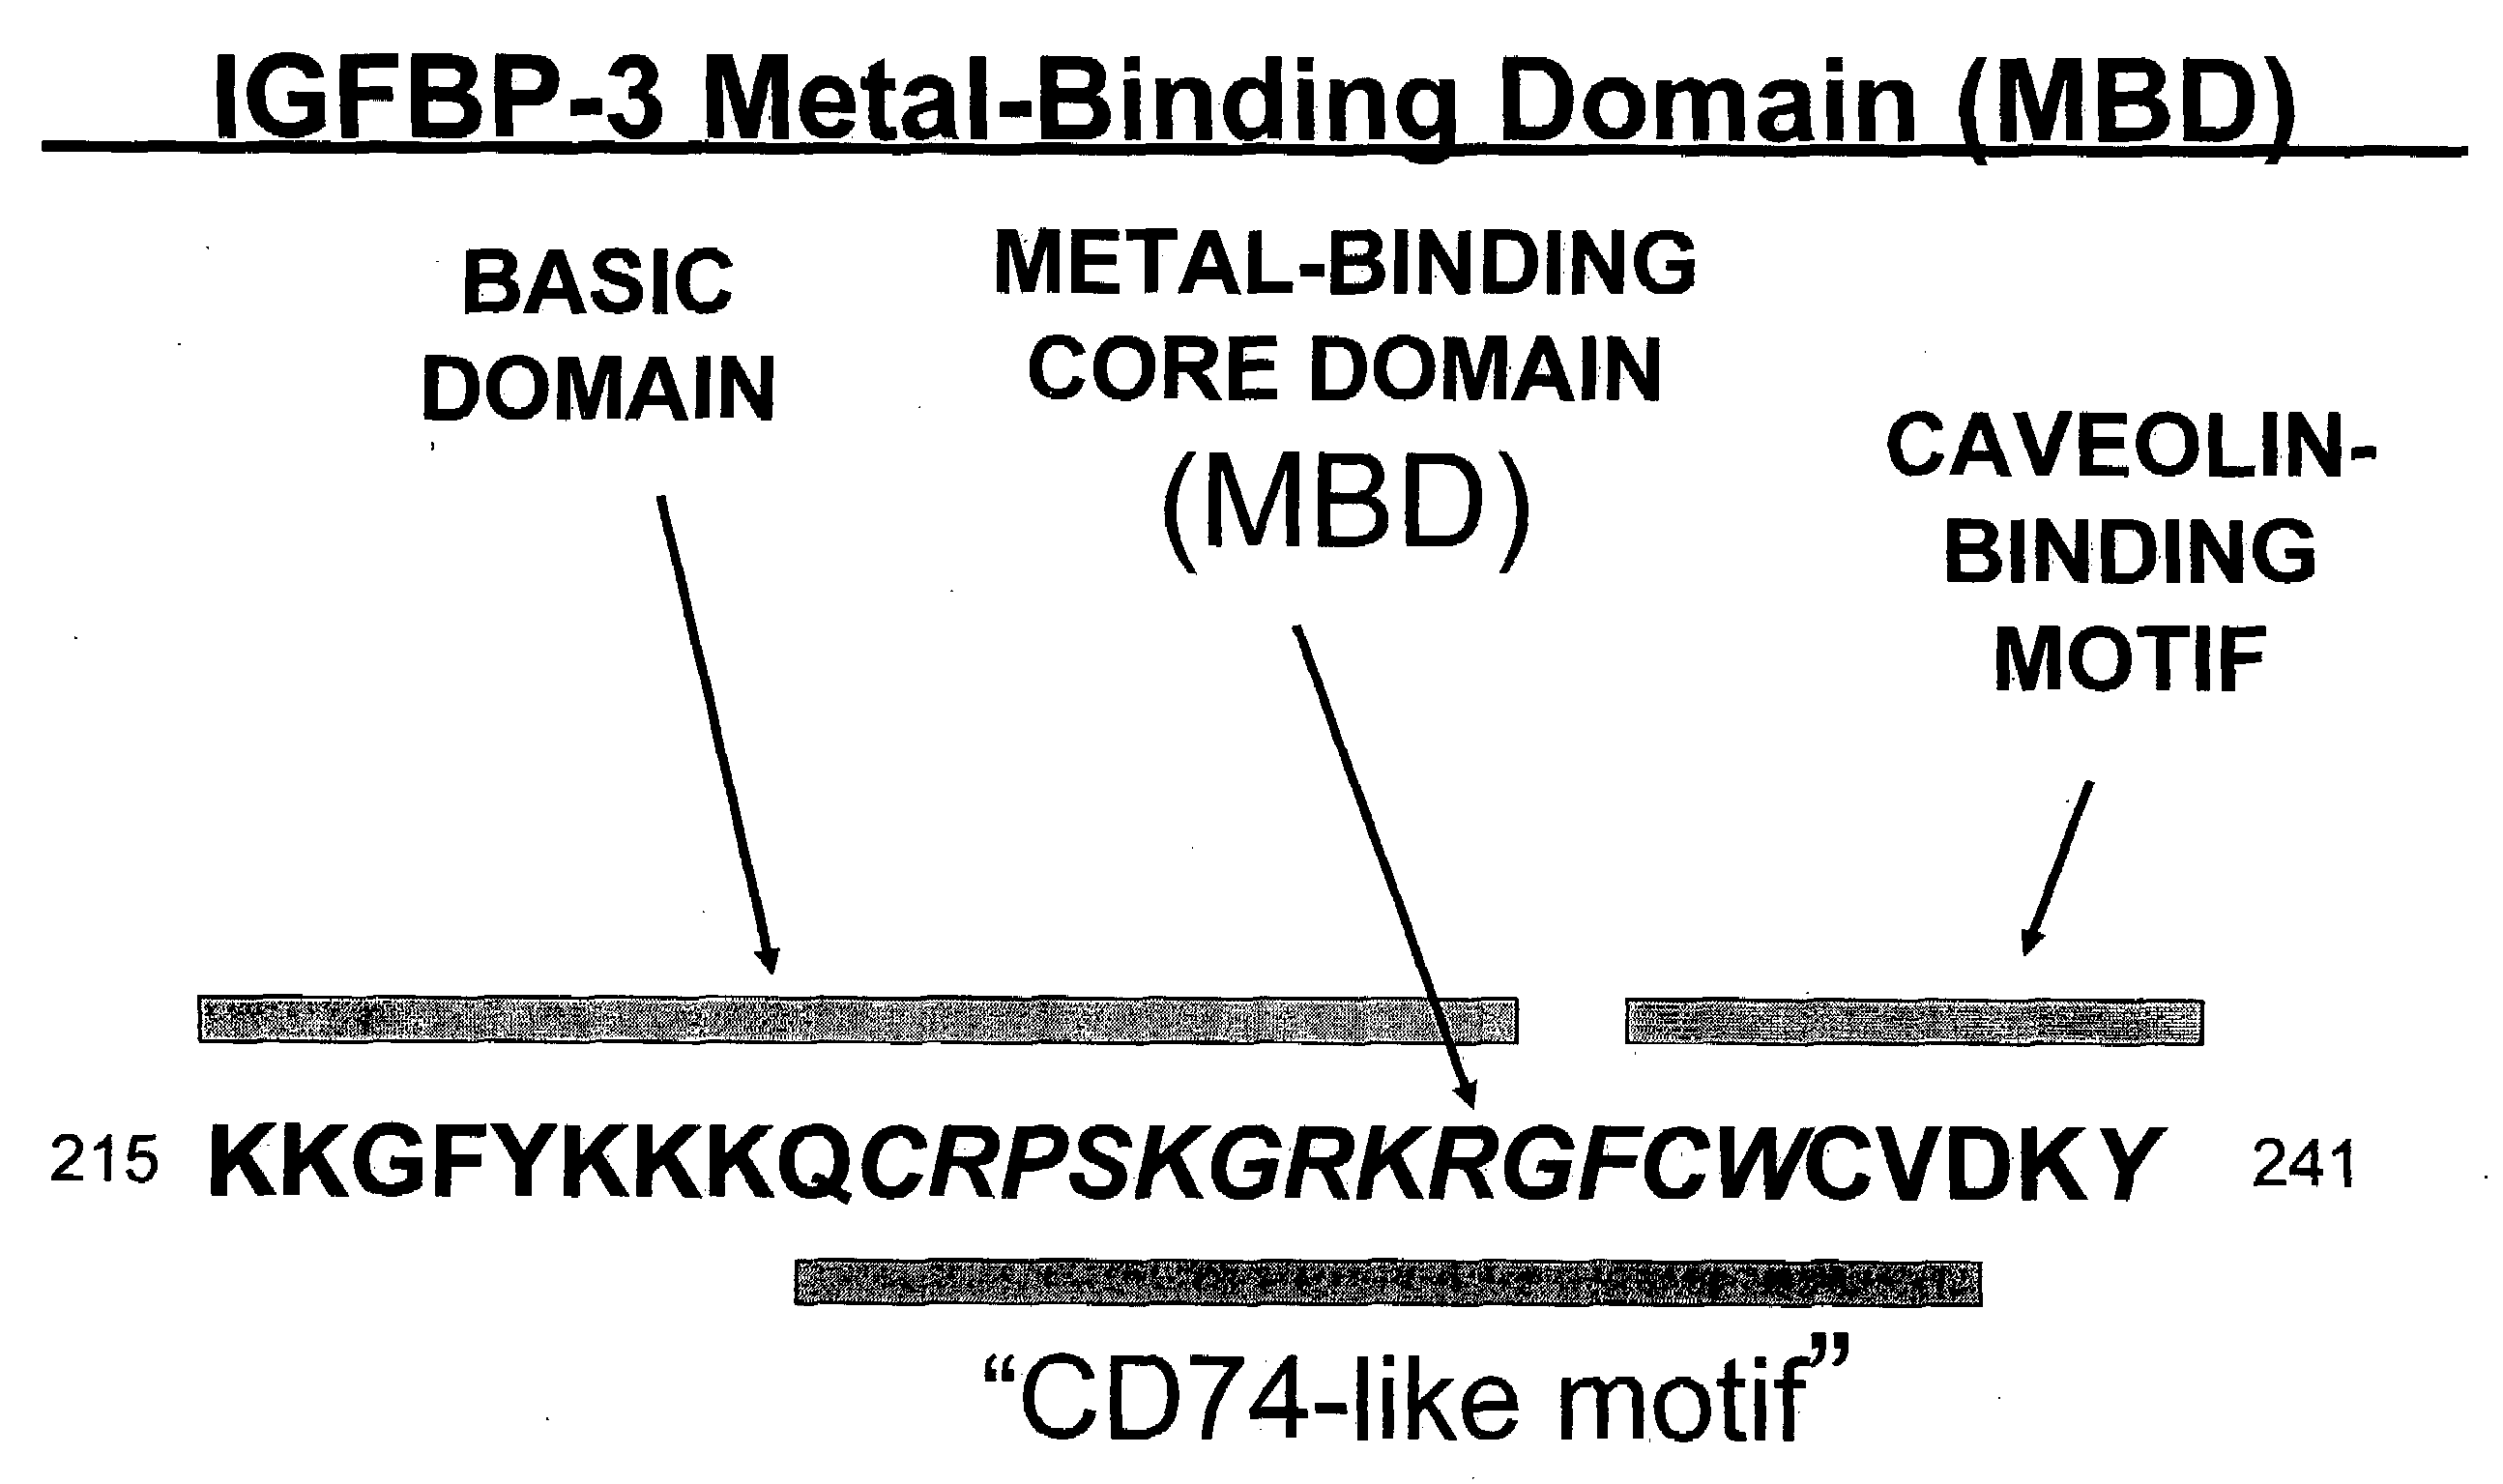 Metal-binding therapeutic peptides